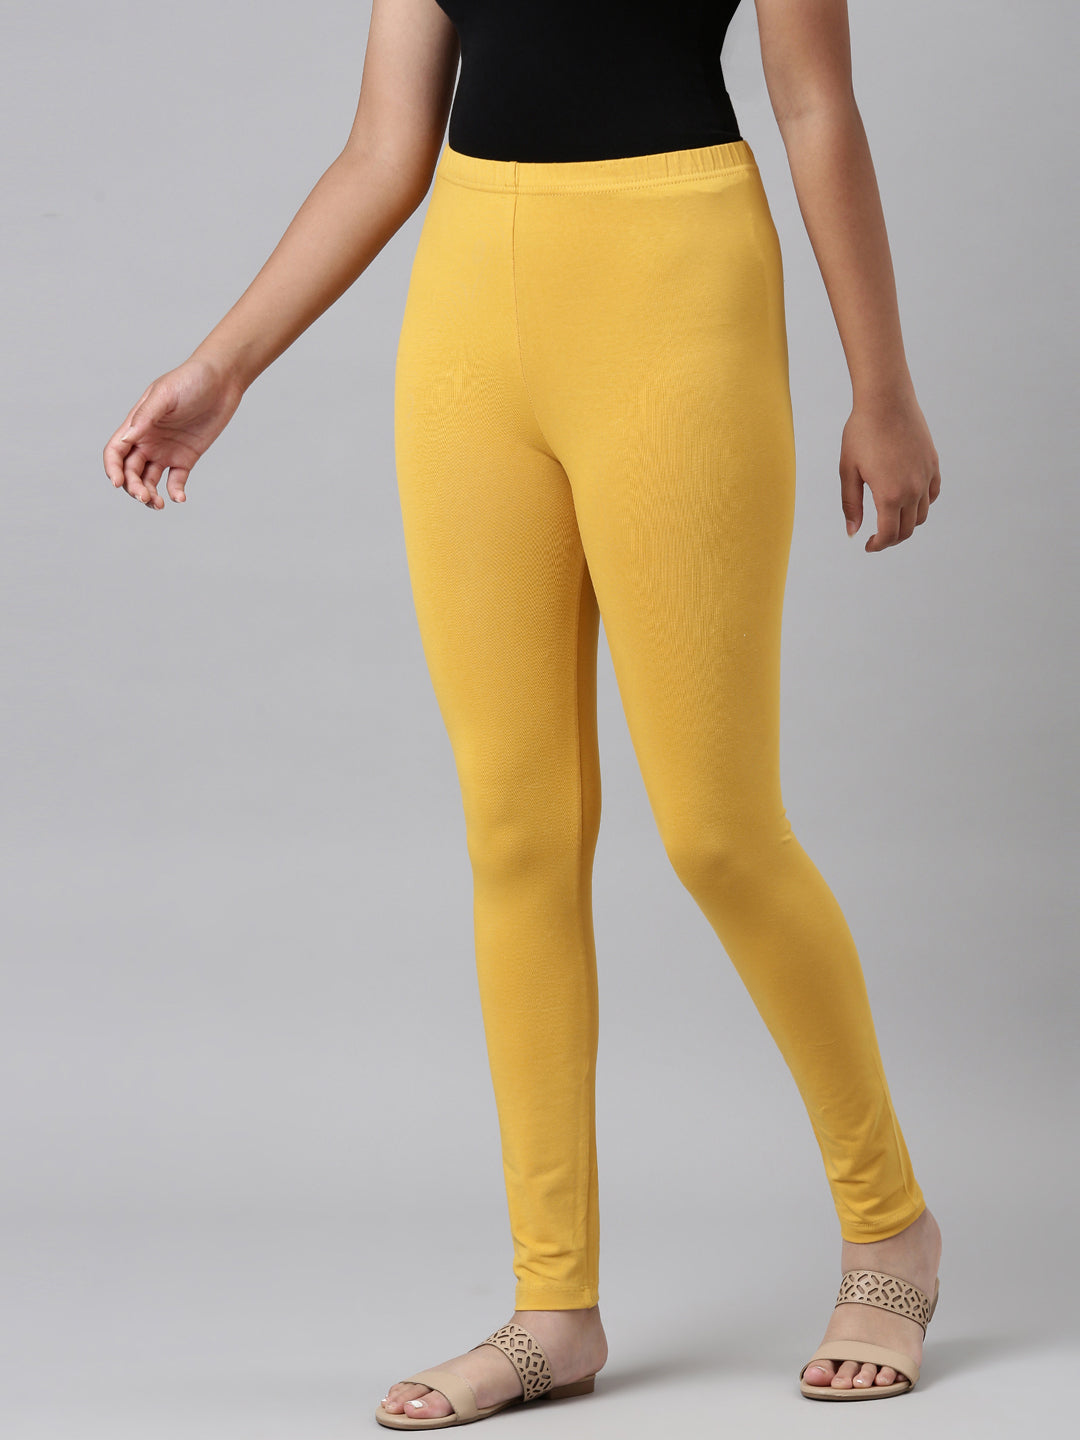 Lyra Style Winter wear Legging (Yellow, Solid) - Shubharambh99